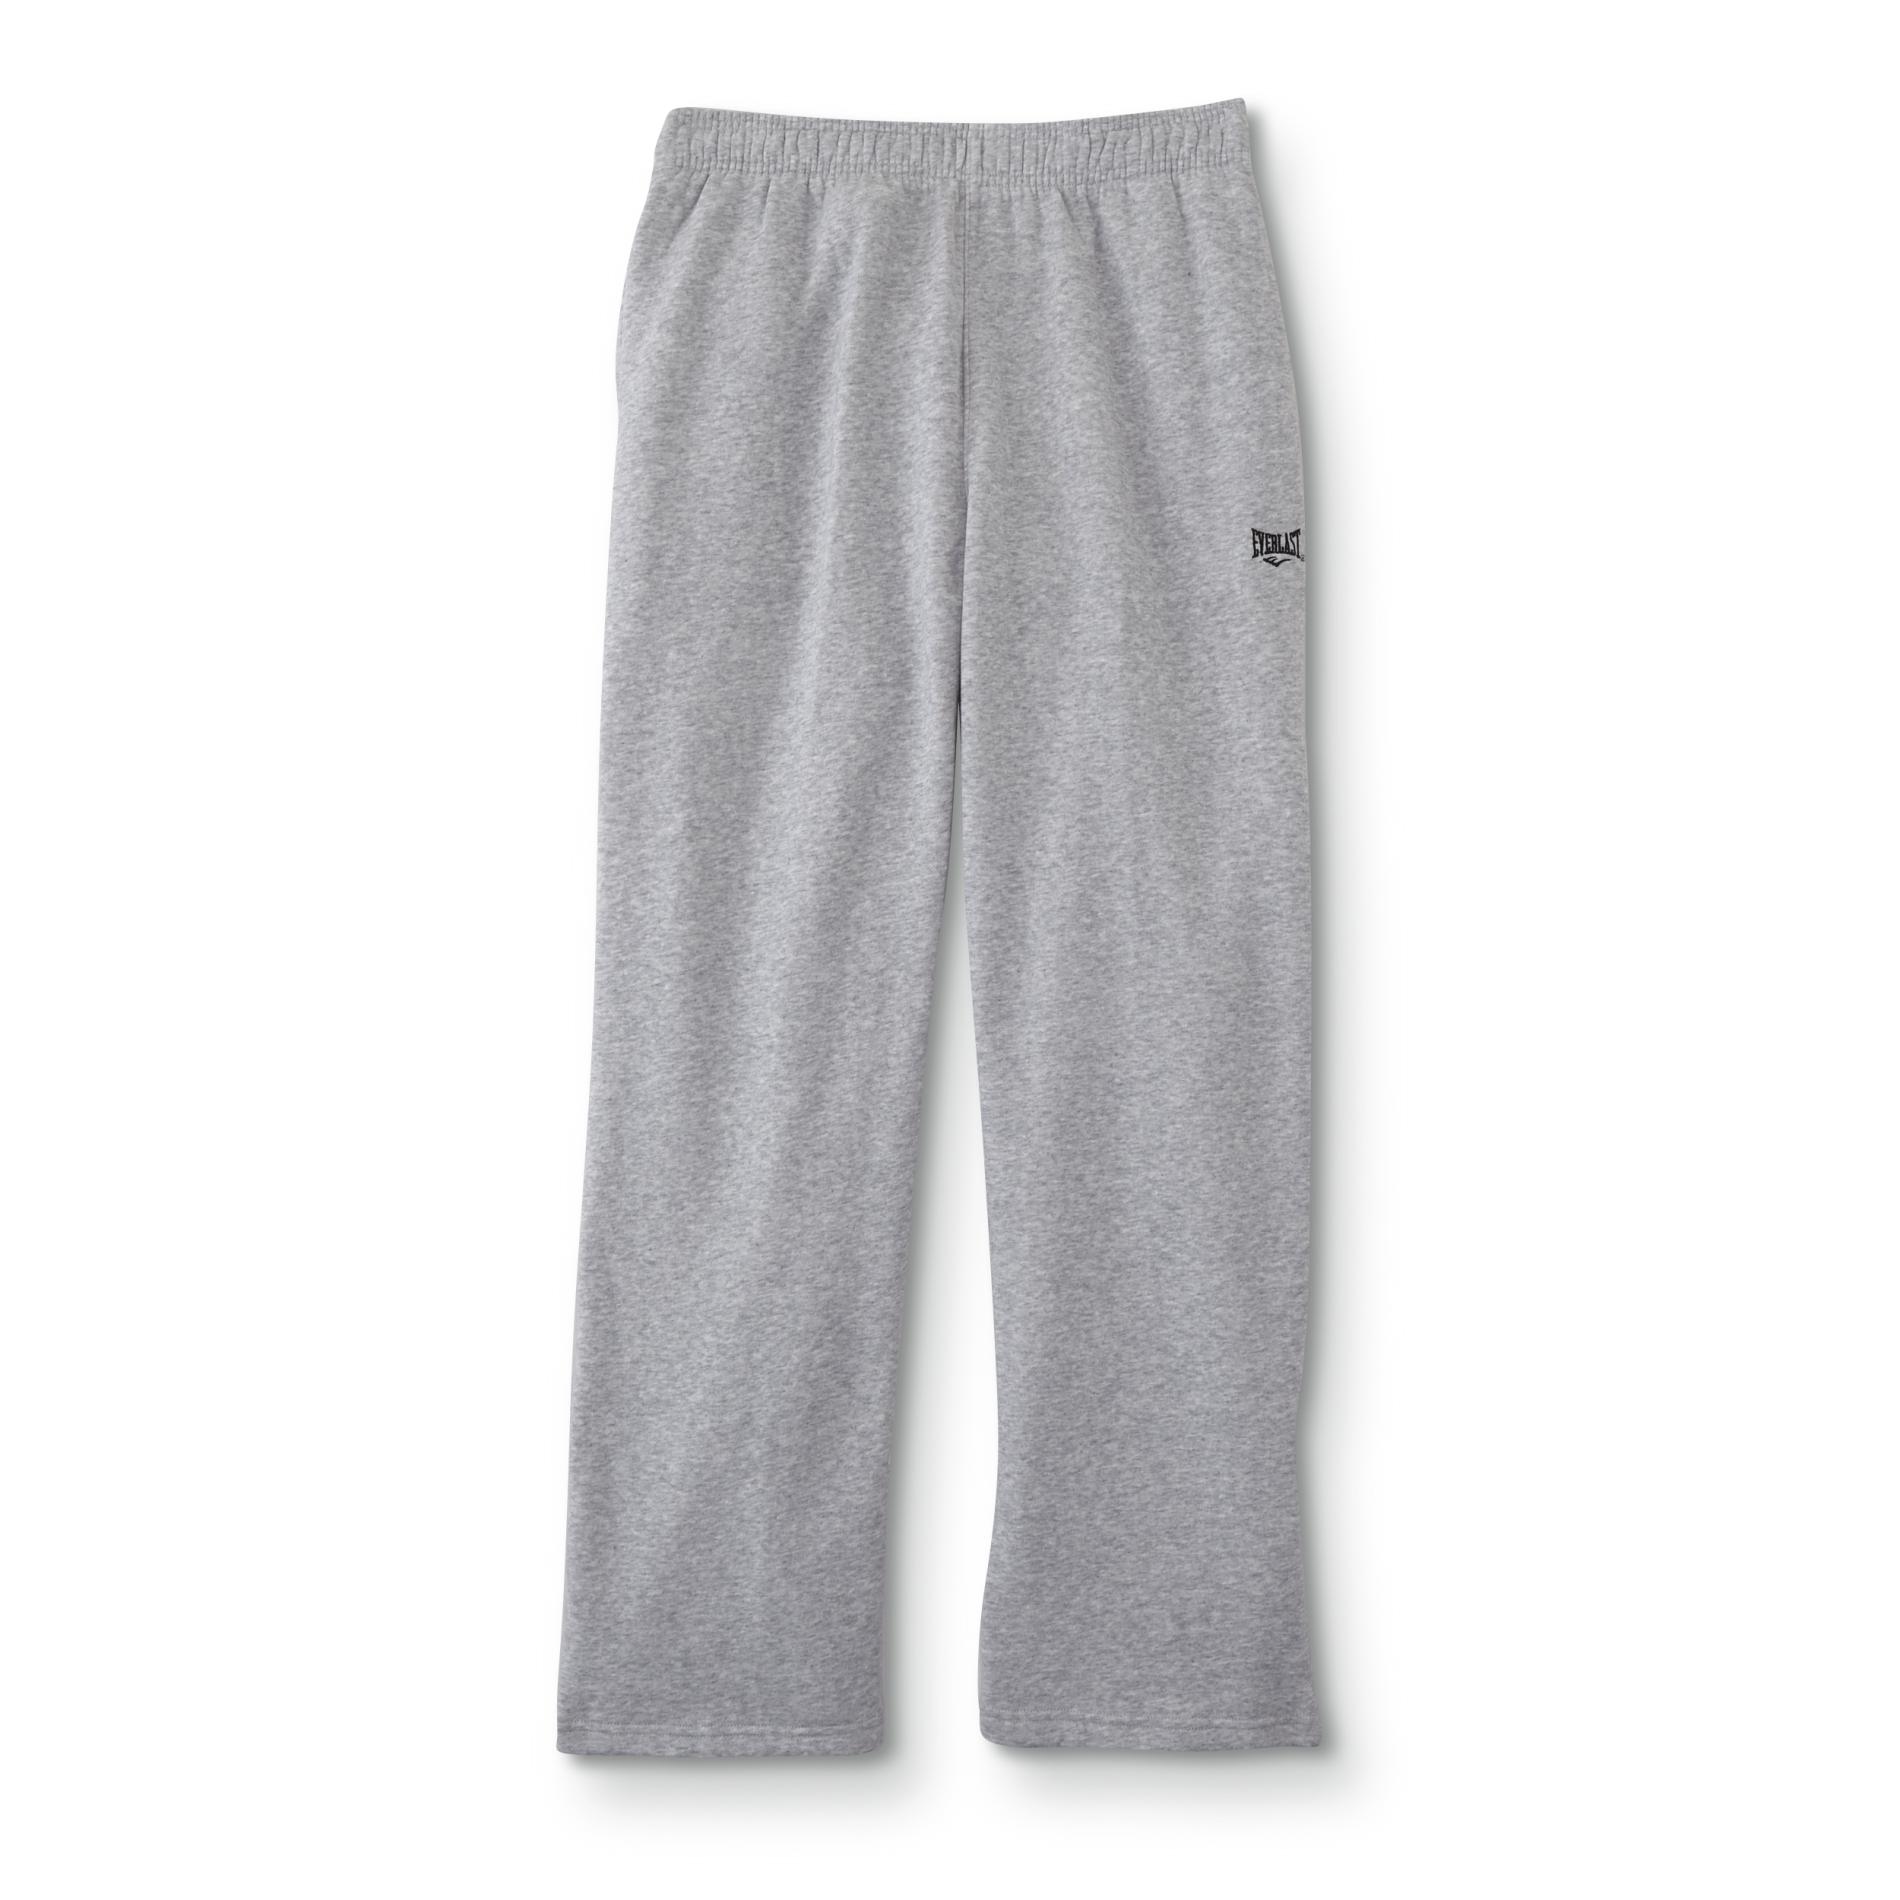 Everlast® Young Men's Fleece-Lined Athletic Pants | Shop Your Way ...